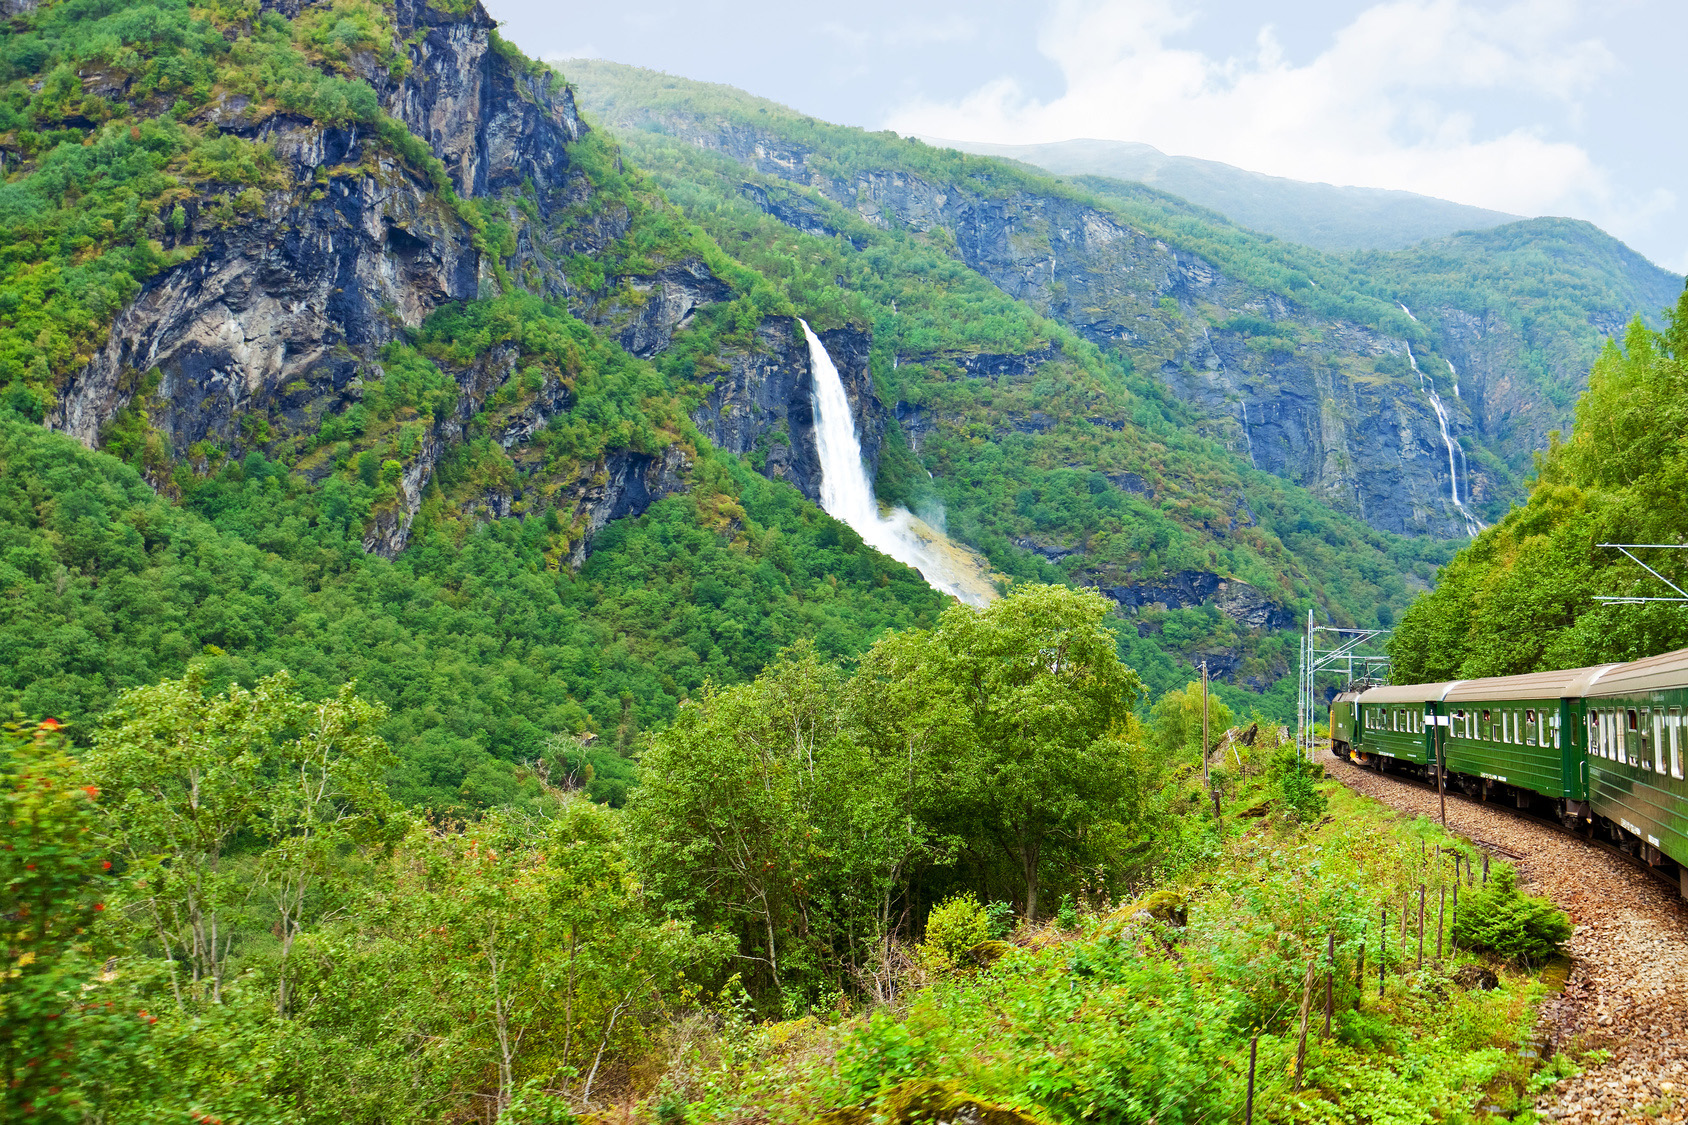 Flam Railway traveling through mountains